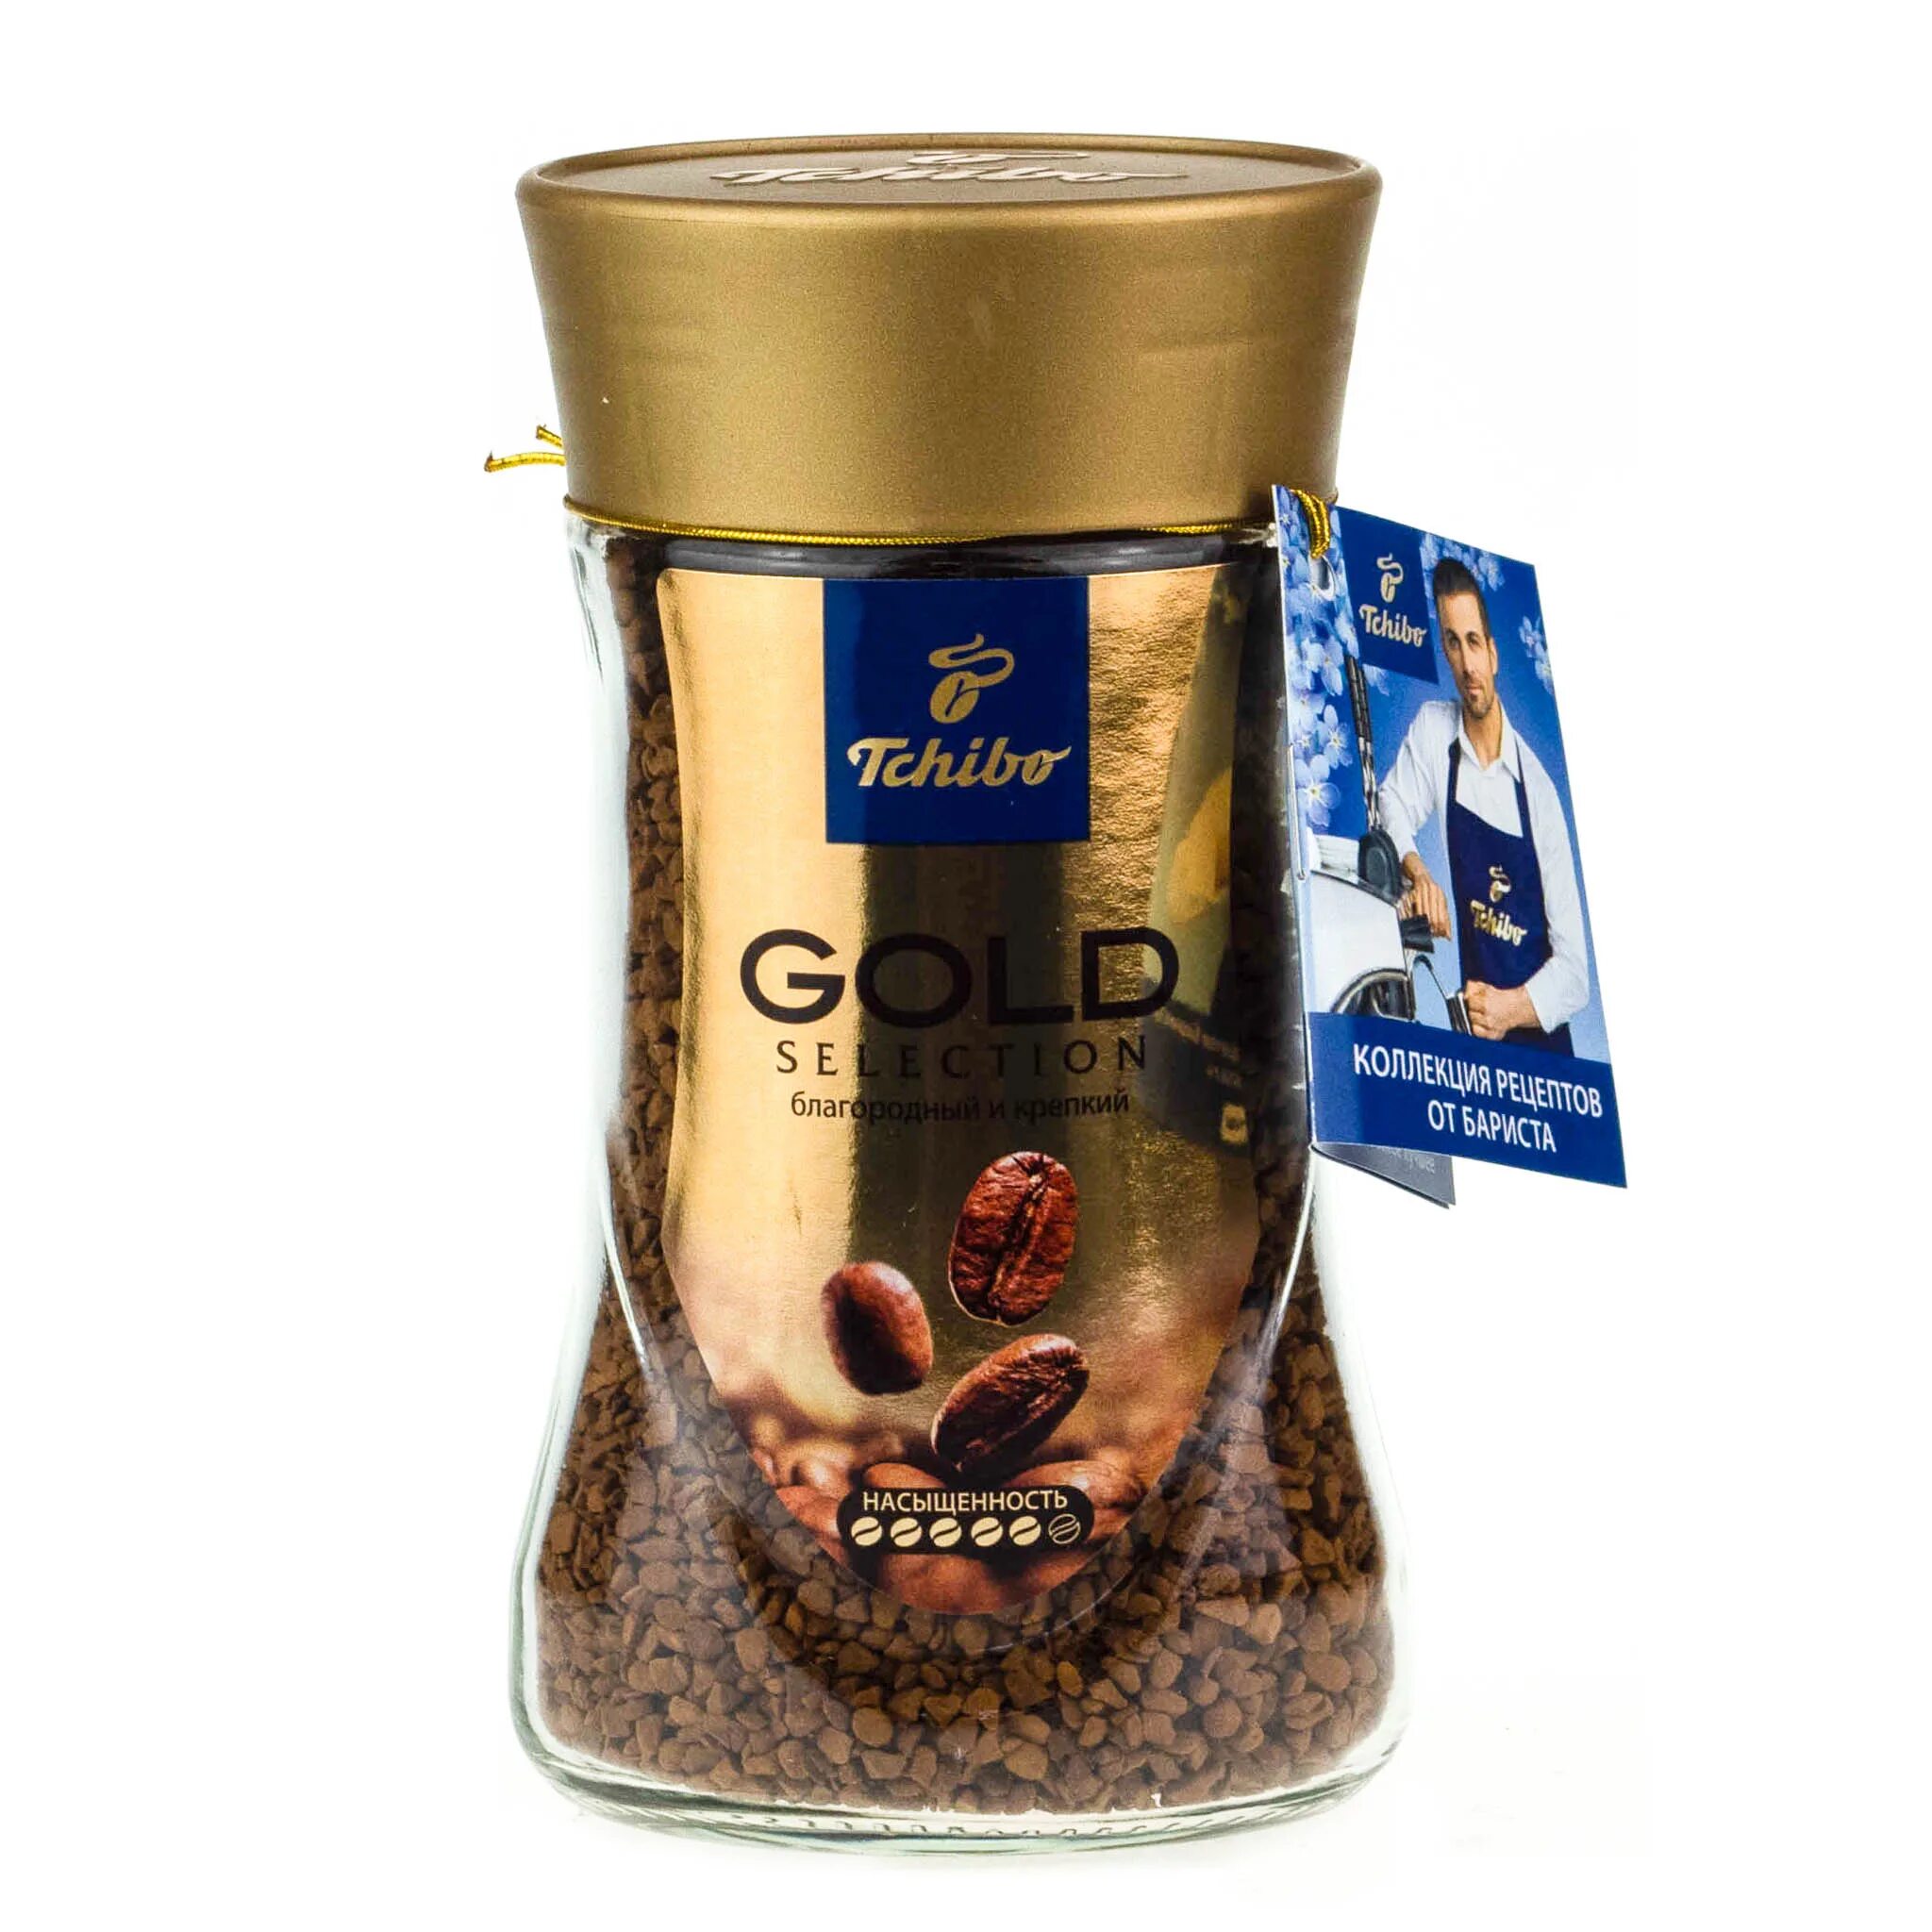 Чибо Голд Селекшн 95г. Кофе Tchibo Gold selection. Кофе растворимый Чибо Голд Селекшен 95г с/б. Кофе Чибо Голд Селекшн 95 г с/б.